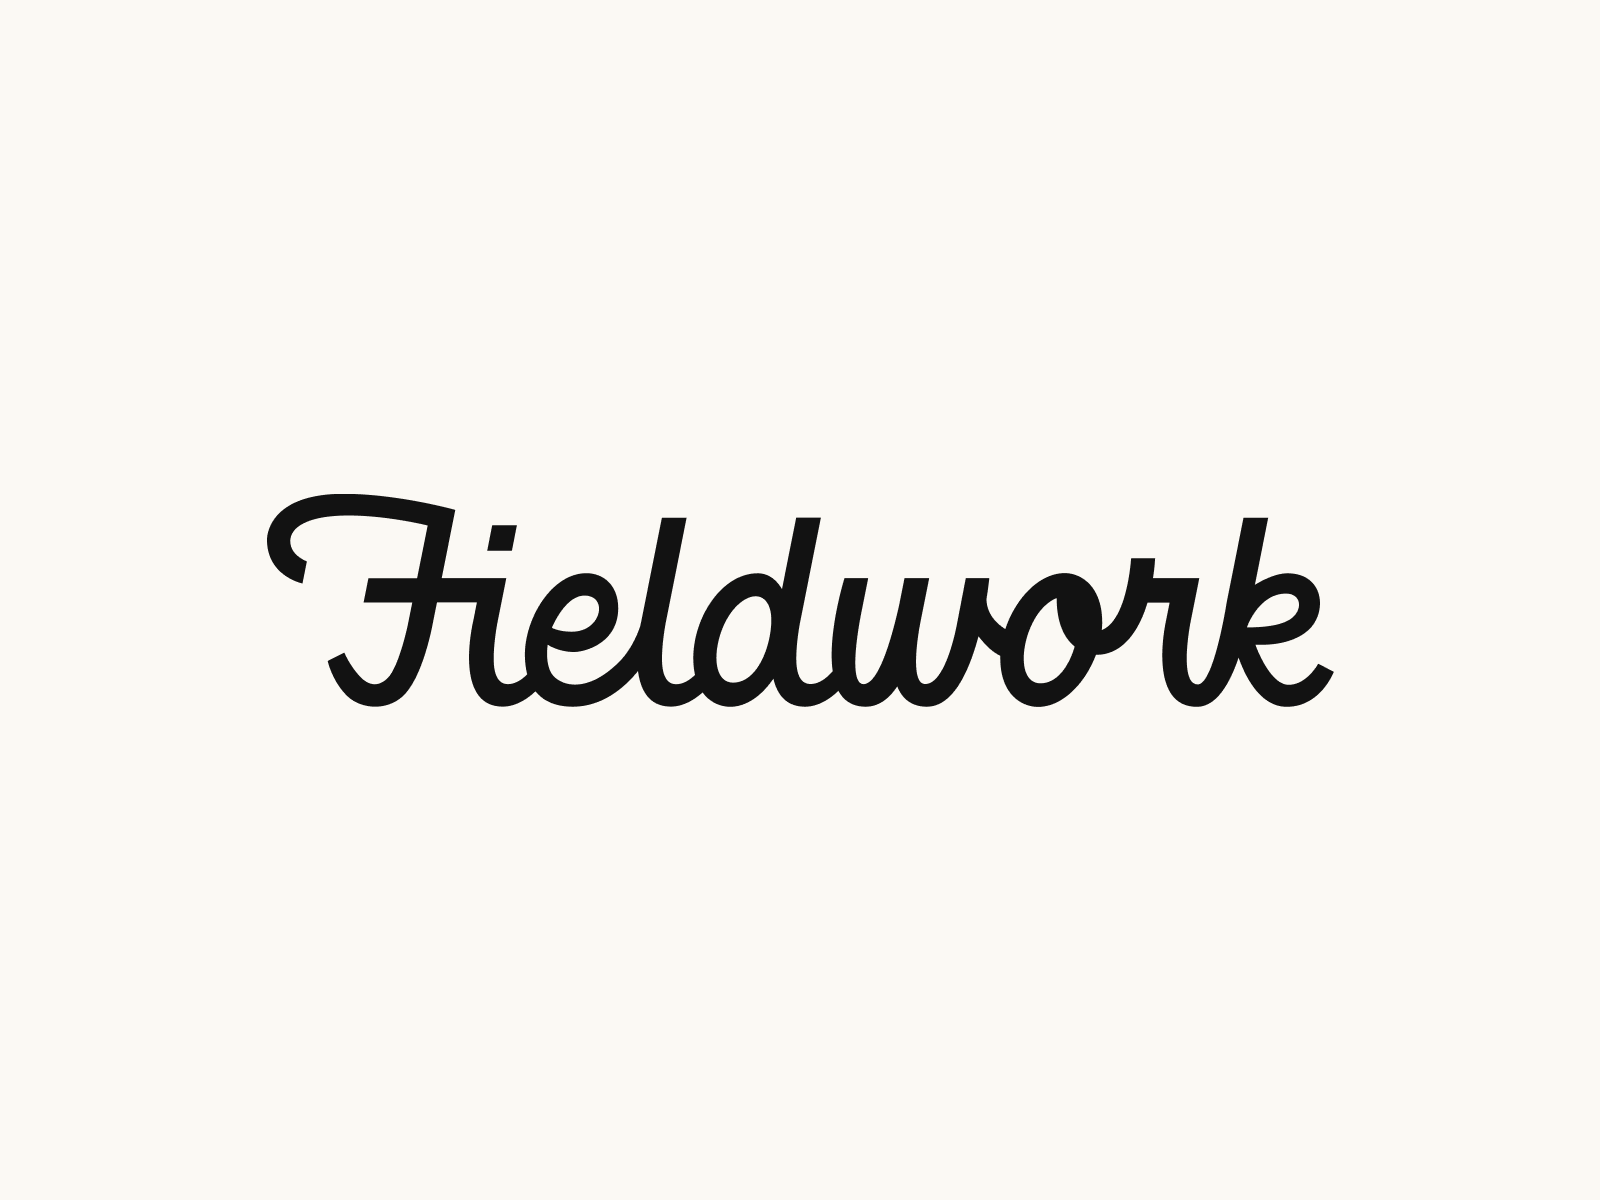 Fieldwork Logo Design